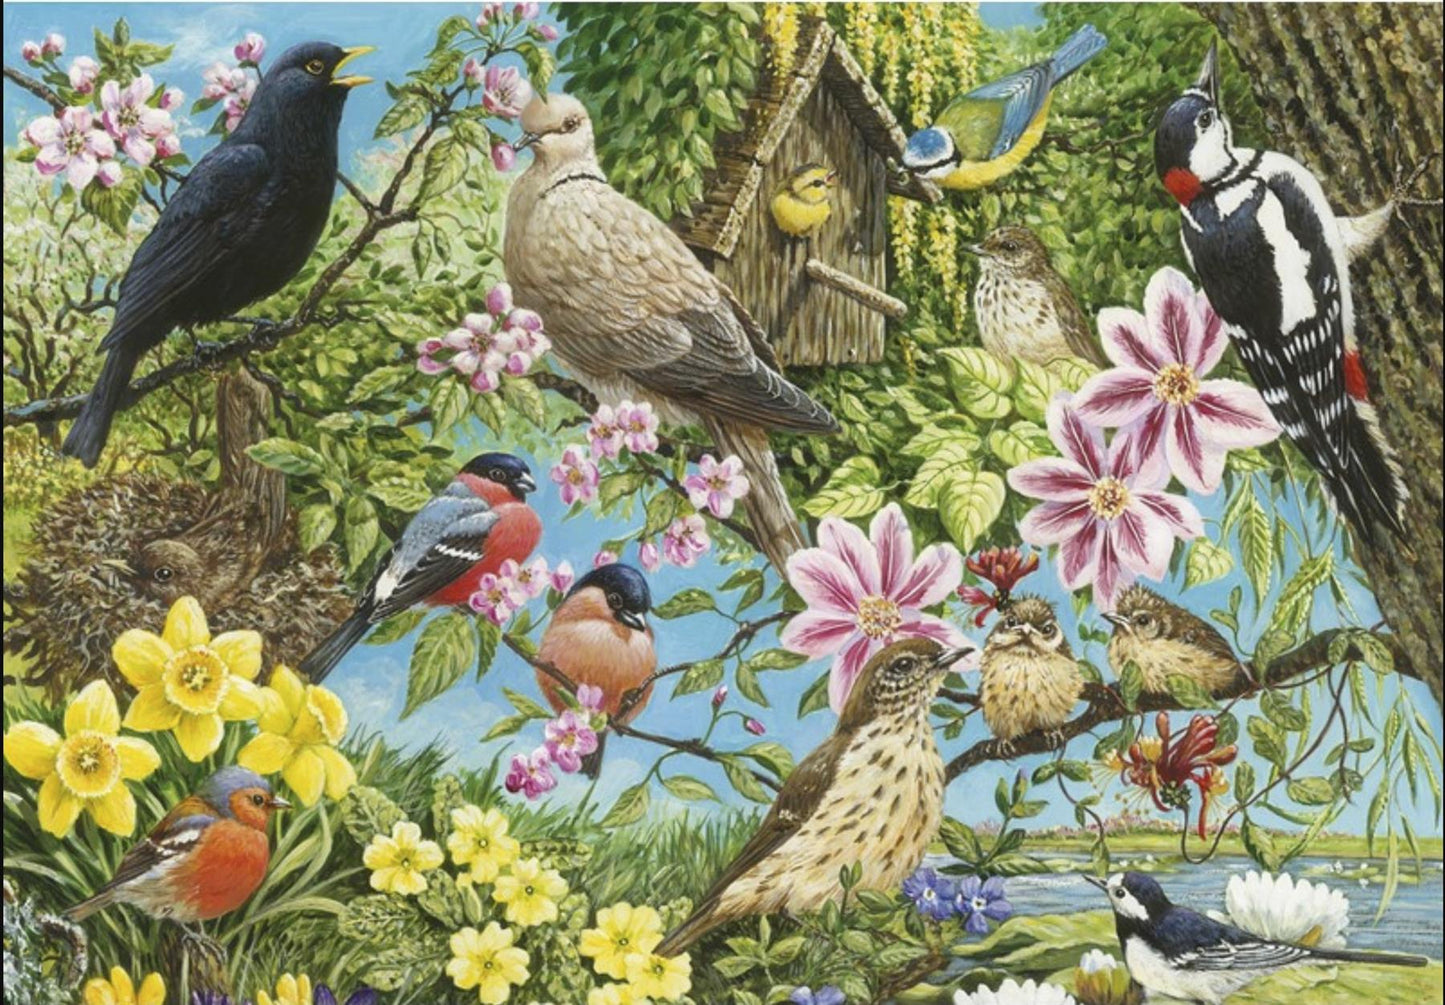 Nature's Finest 500 Piece Jigsaw Puzzle